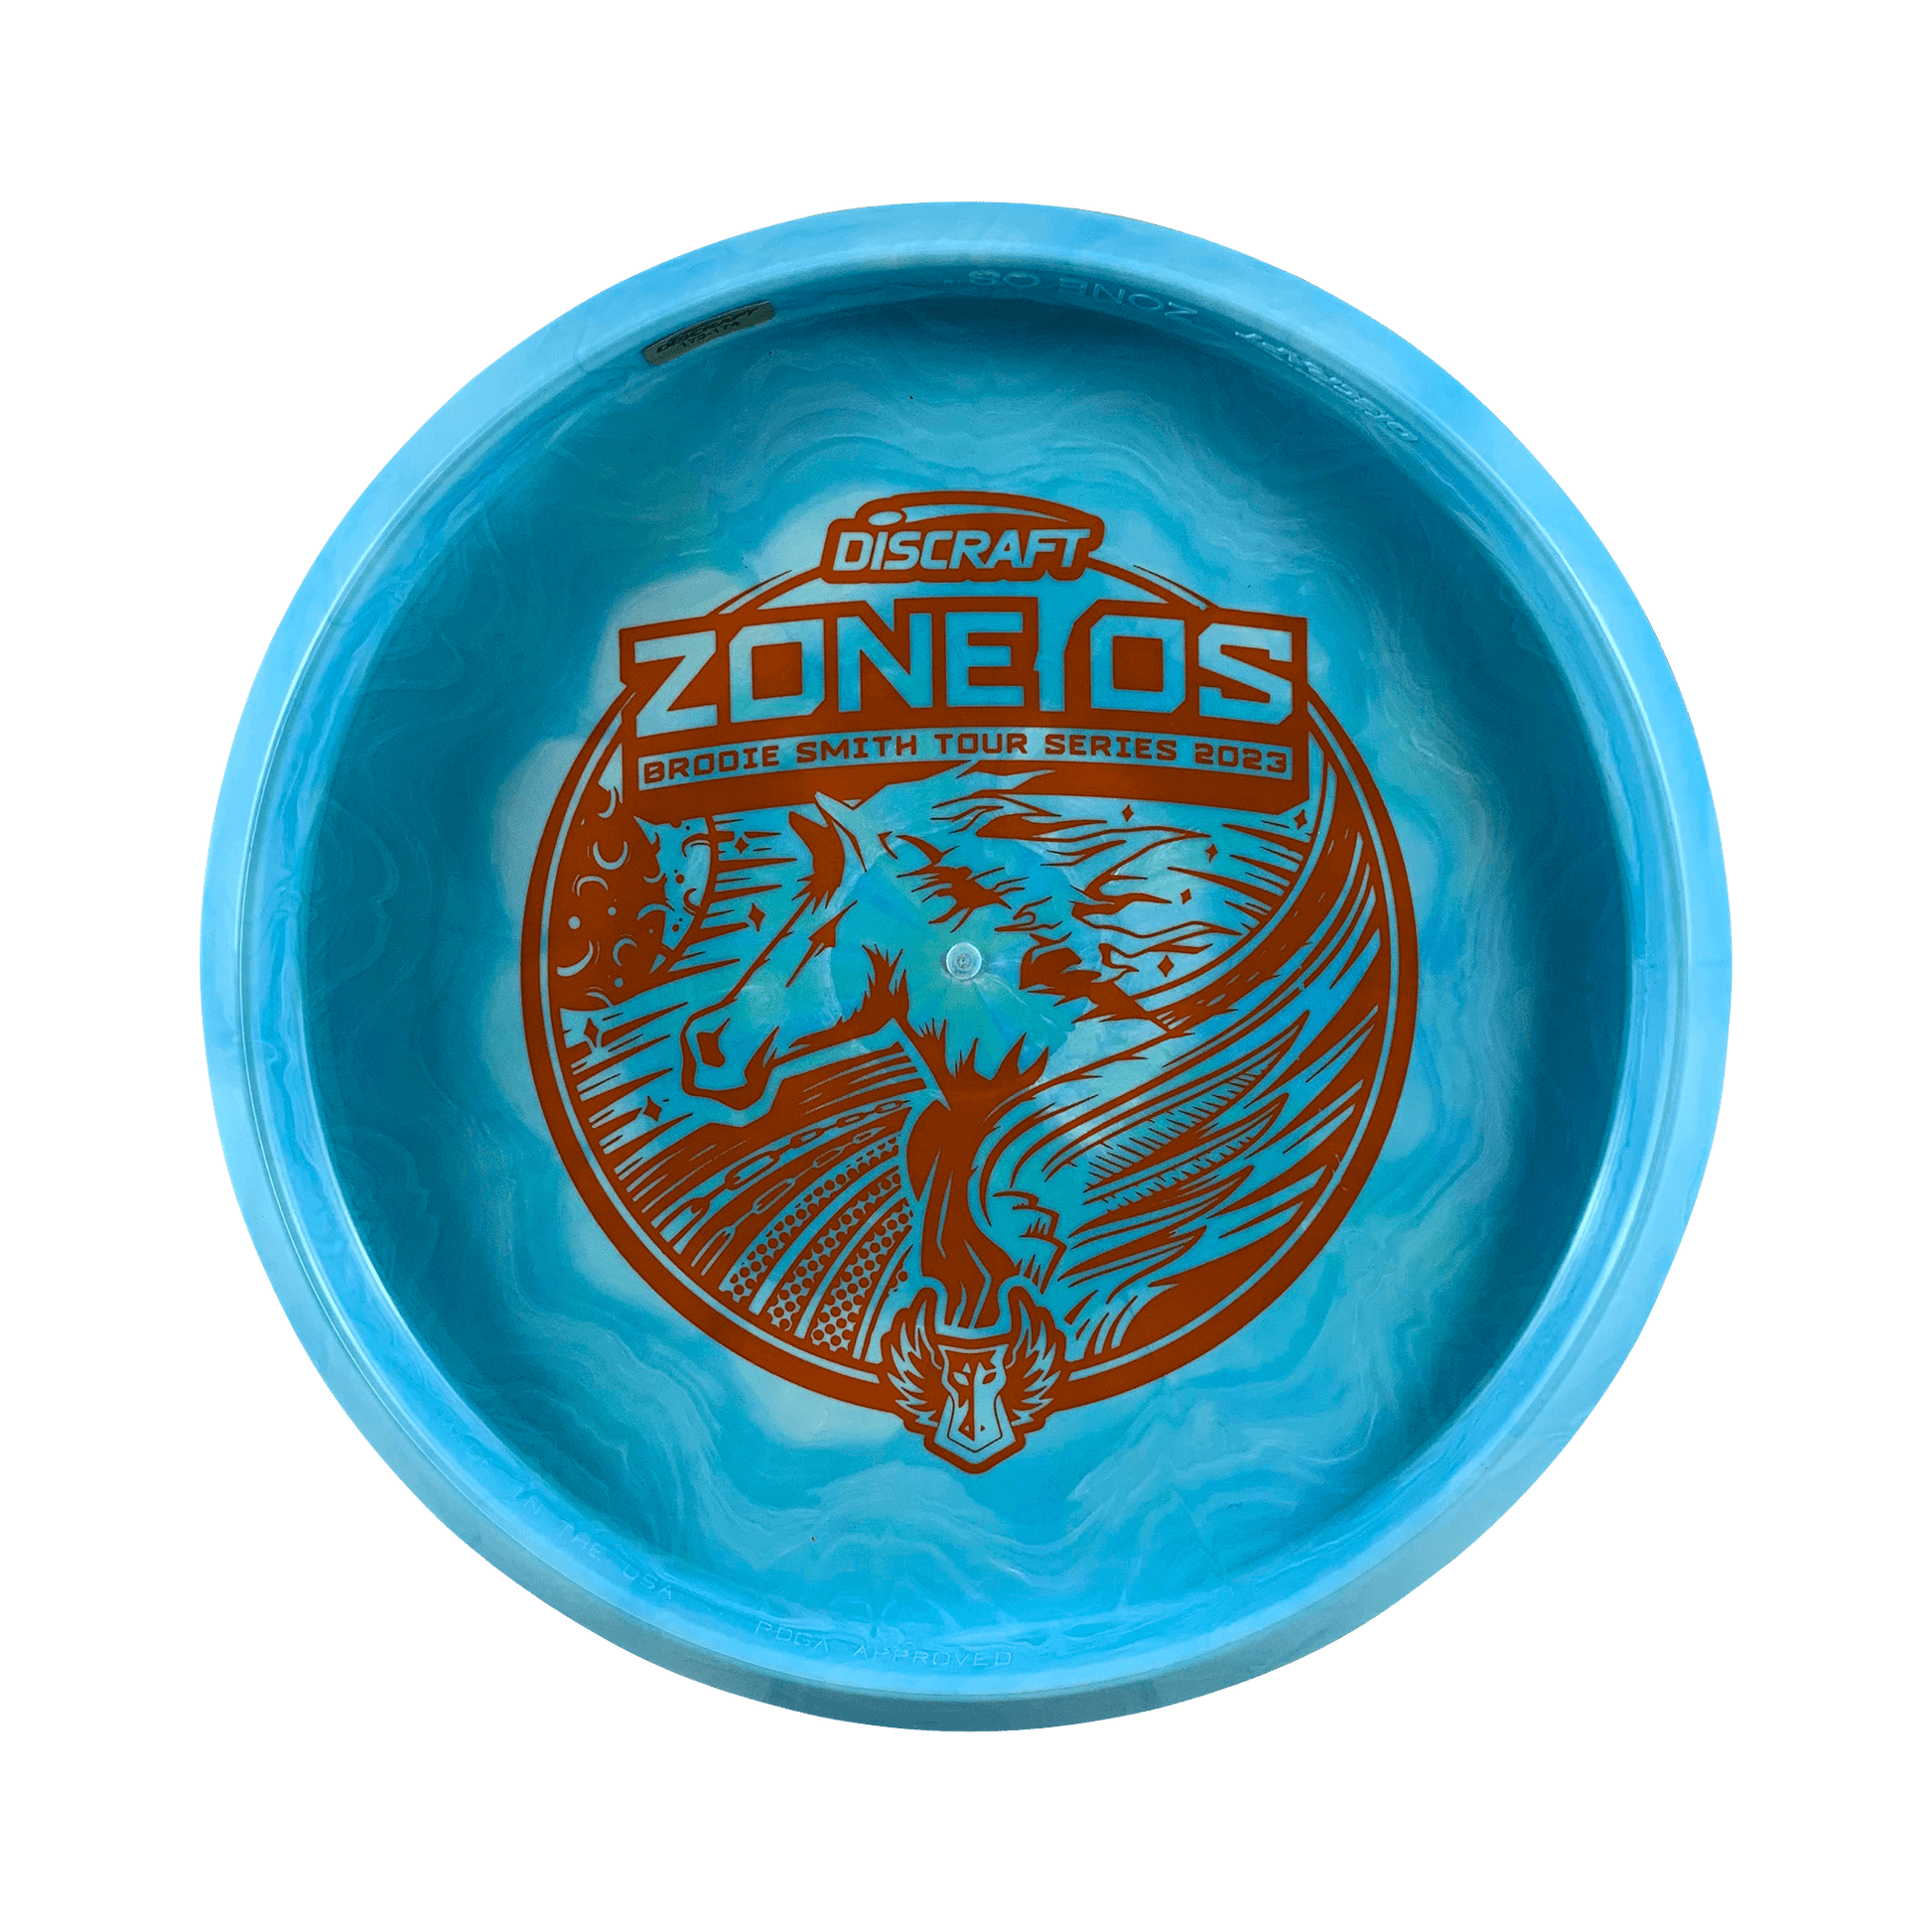 ESP Zone OS - Brodie Smith Tour Series 2023 Bottom Stamp Disc Discraft multi / light blue 173 